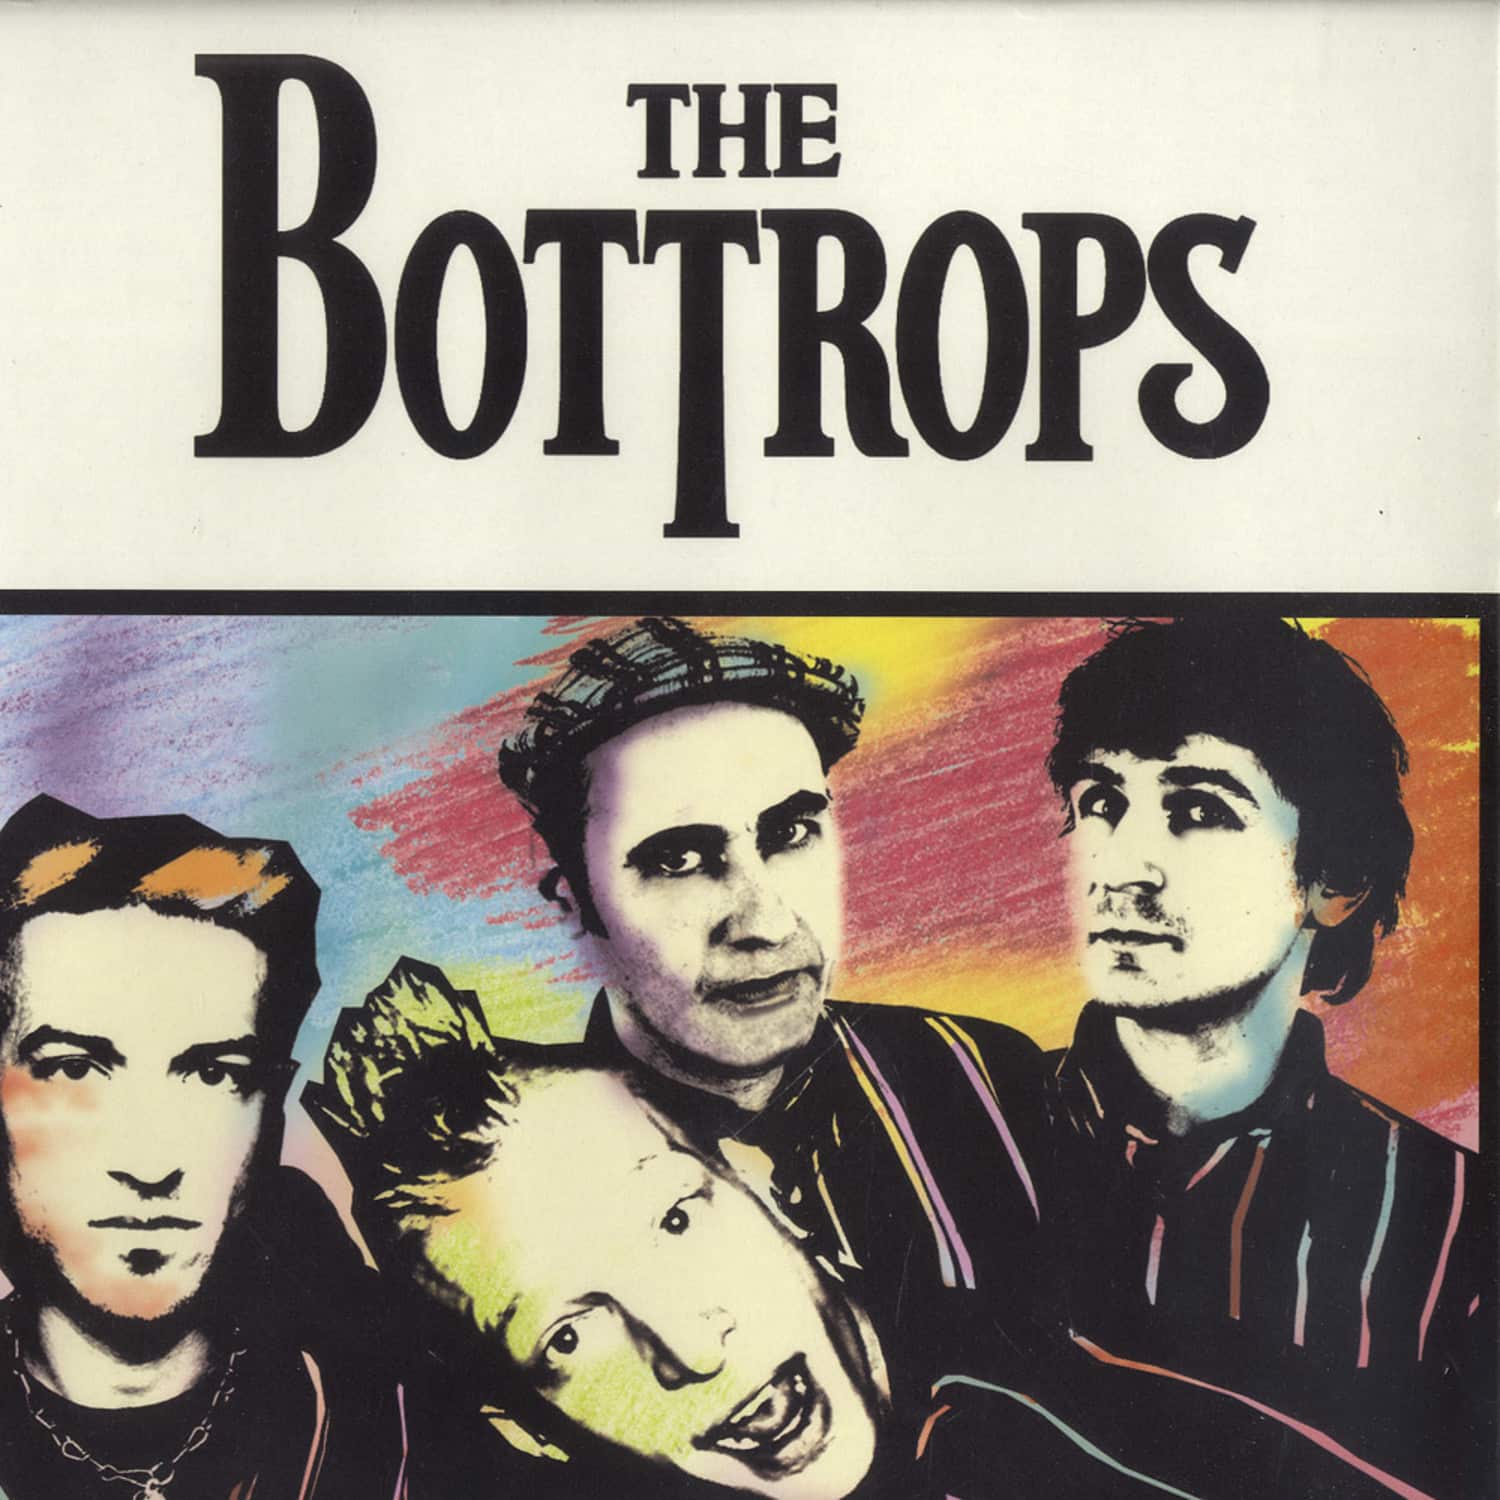 The Bottrops - THE BOTTROPS 